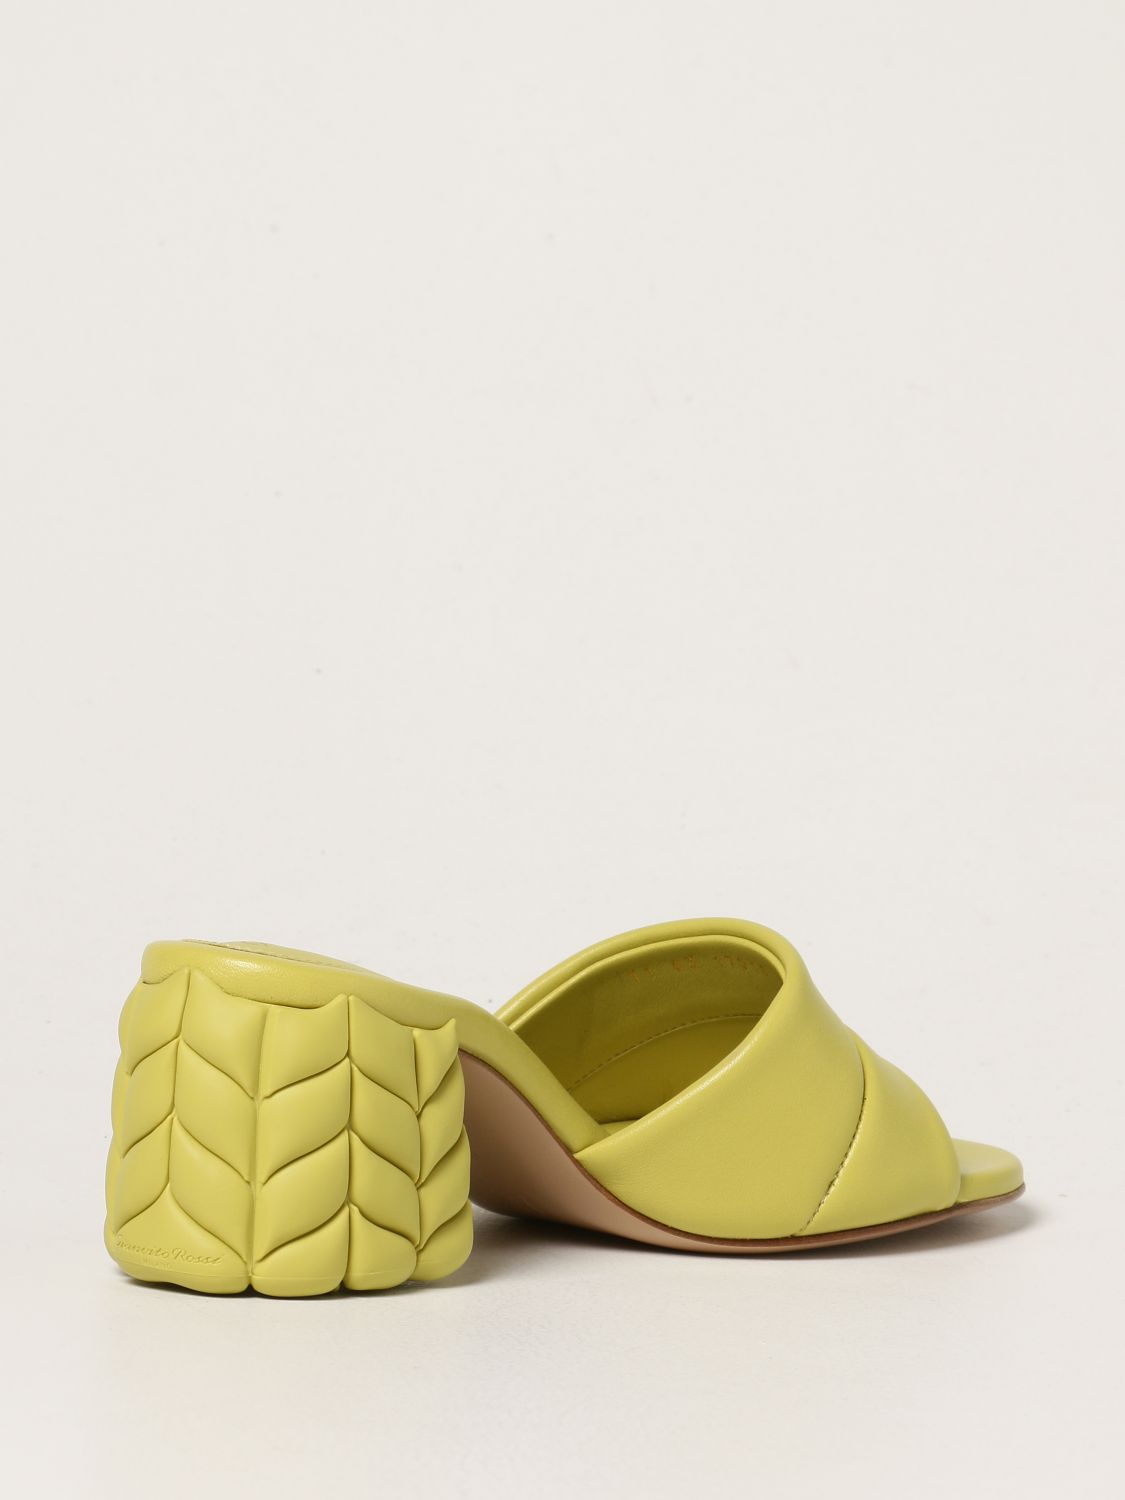 gianvito rossi yellow sandals